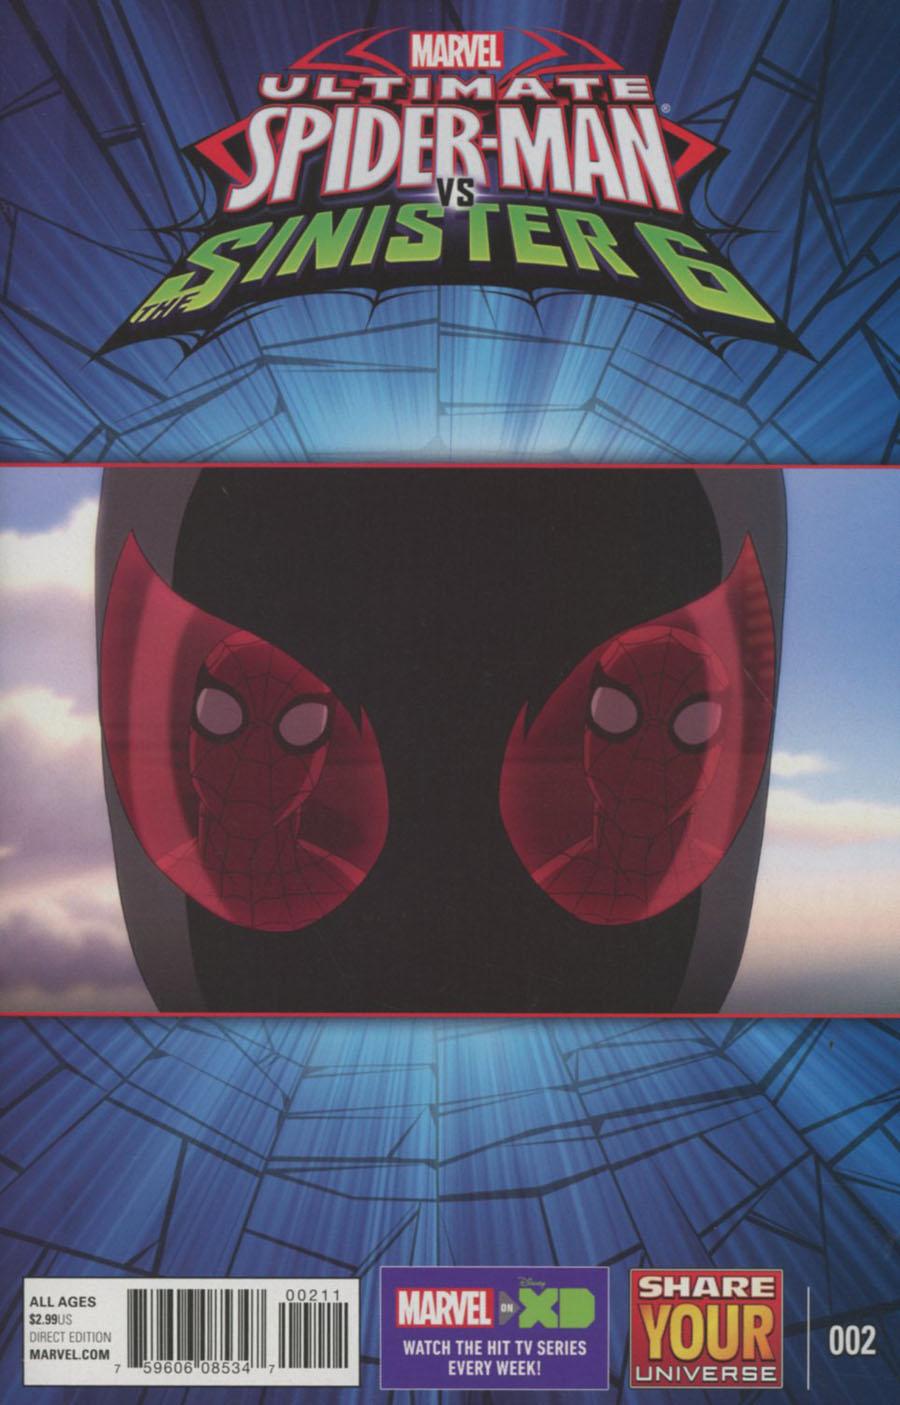 Marvel Universe Ultimate Spider-Man vs Sinister Six Vol. 1 #2